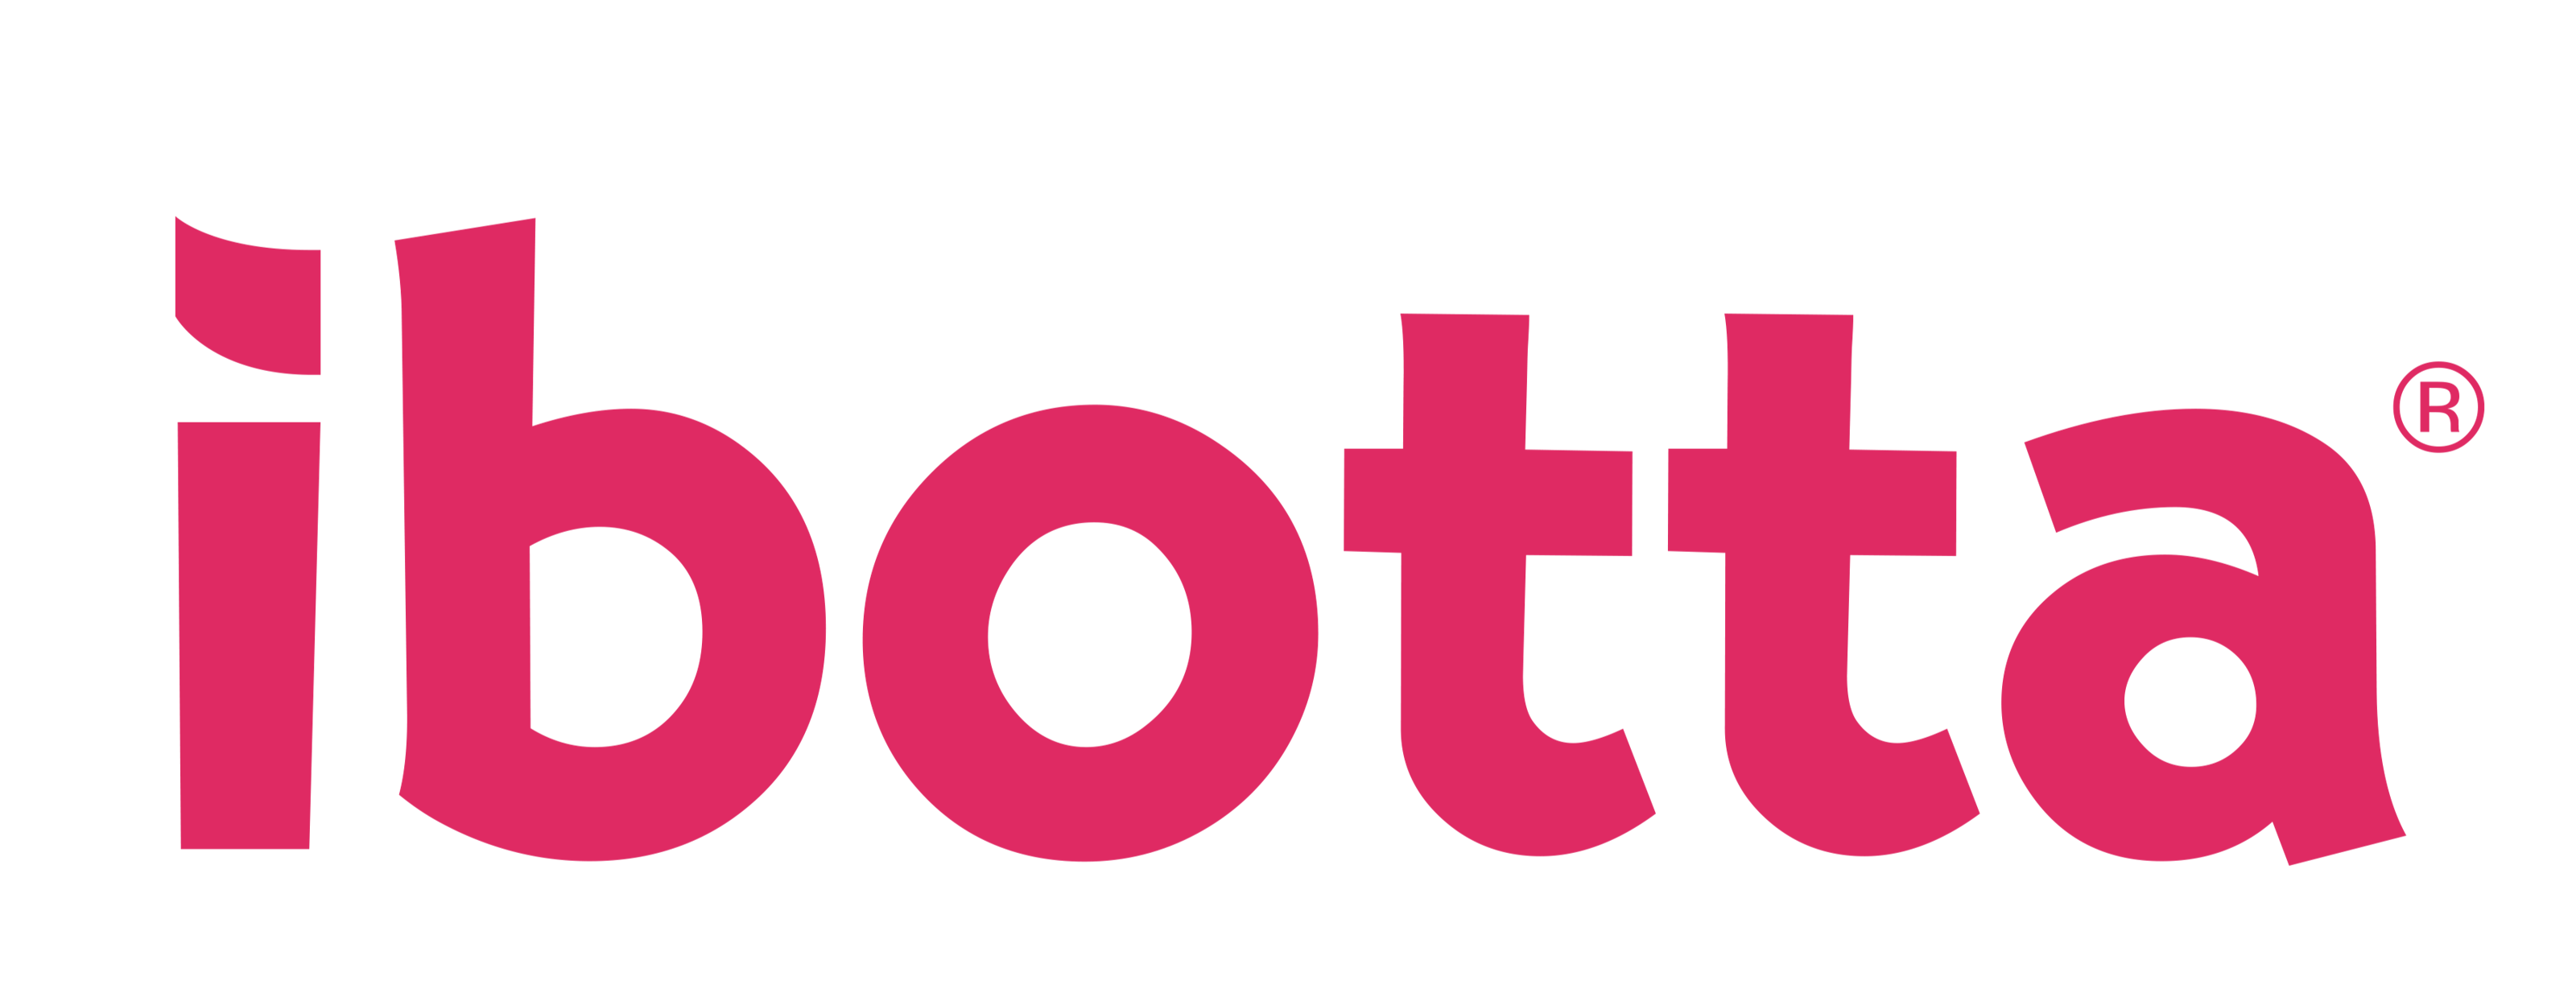 Ibotta logo